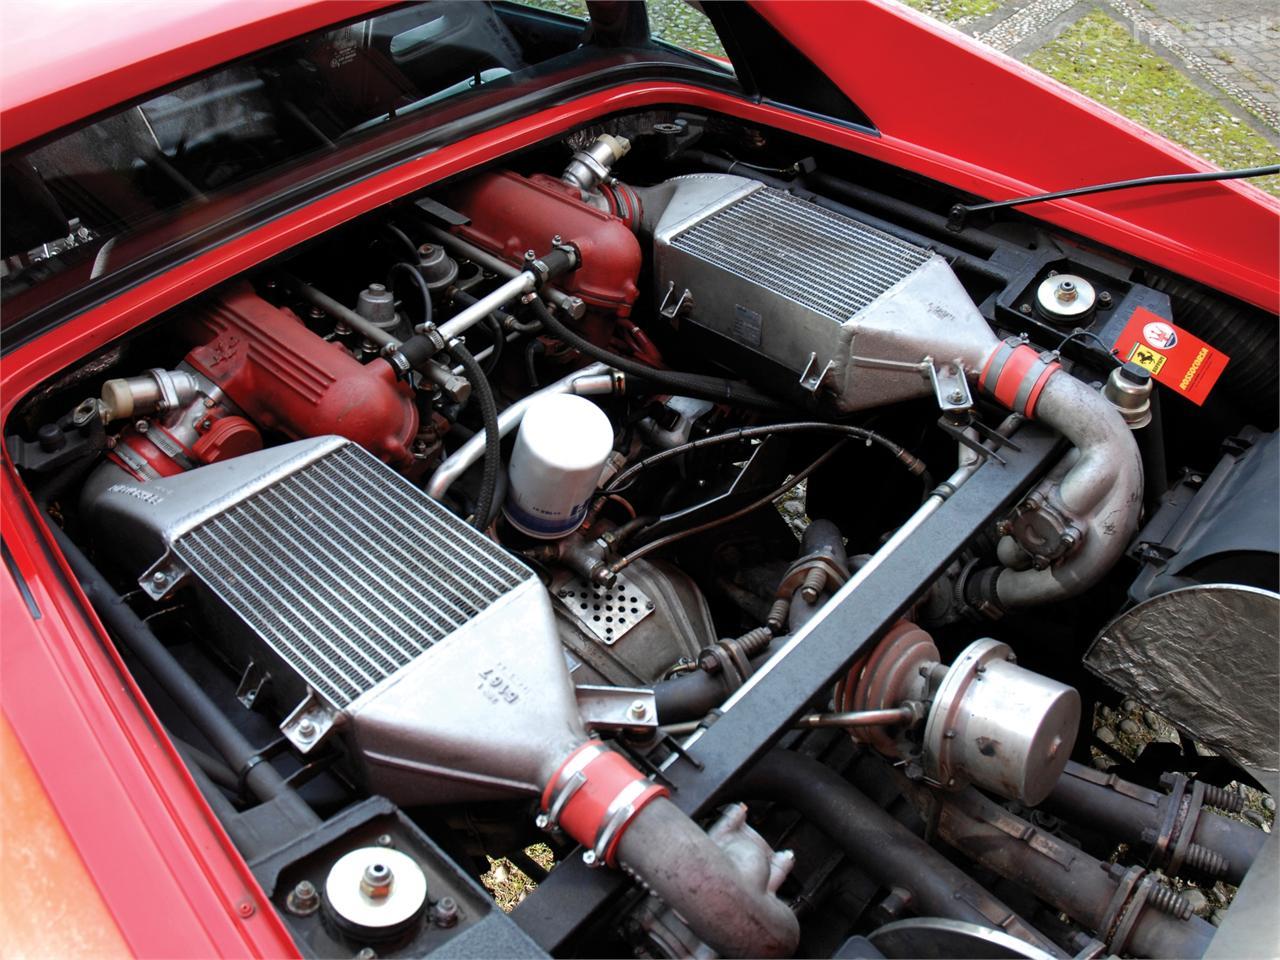 Dos turbocompresores IHI se encargaban de sobrealimentar un motor V8 de 2,8 litros para lograr una potencia máxima de 400 CV.